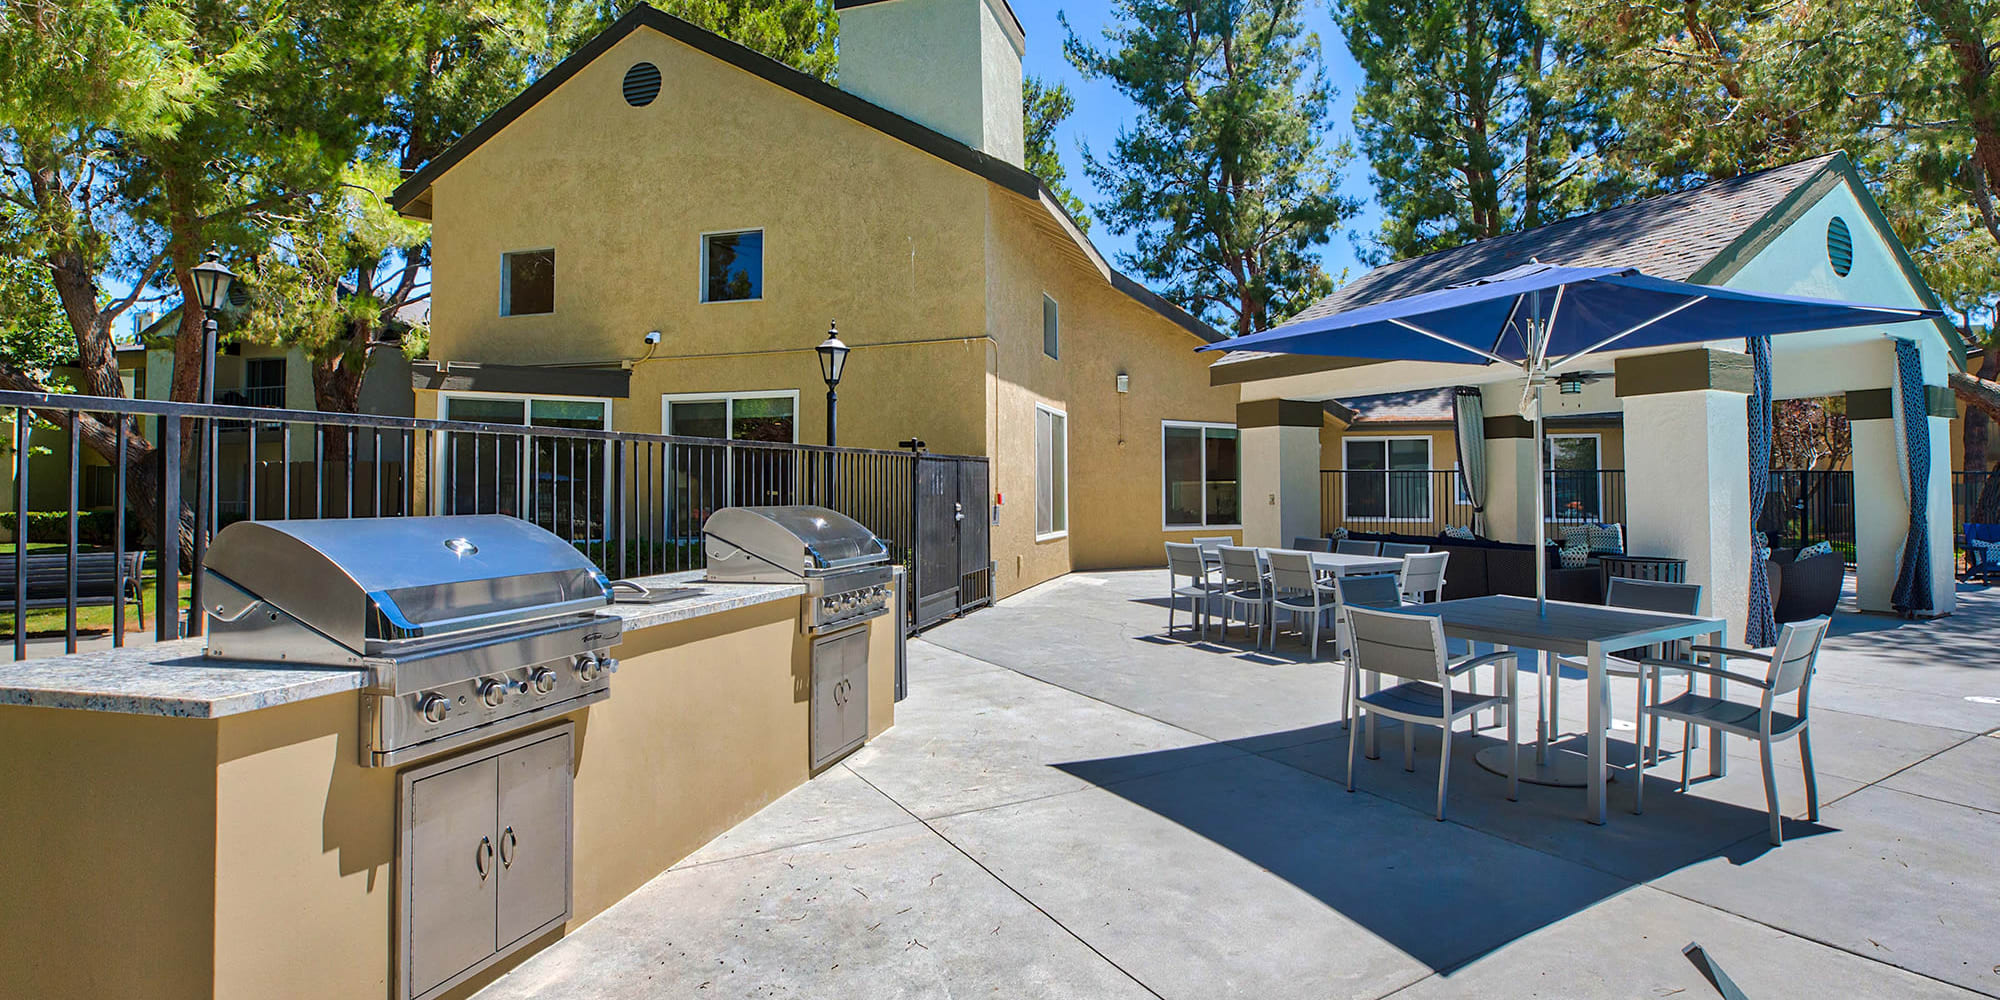 Gas barbecue grills near the picnic area at Mountain Vista in Victorville, California